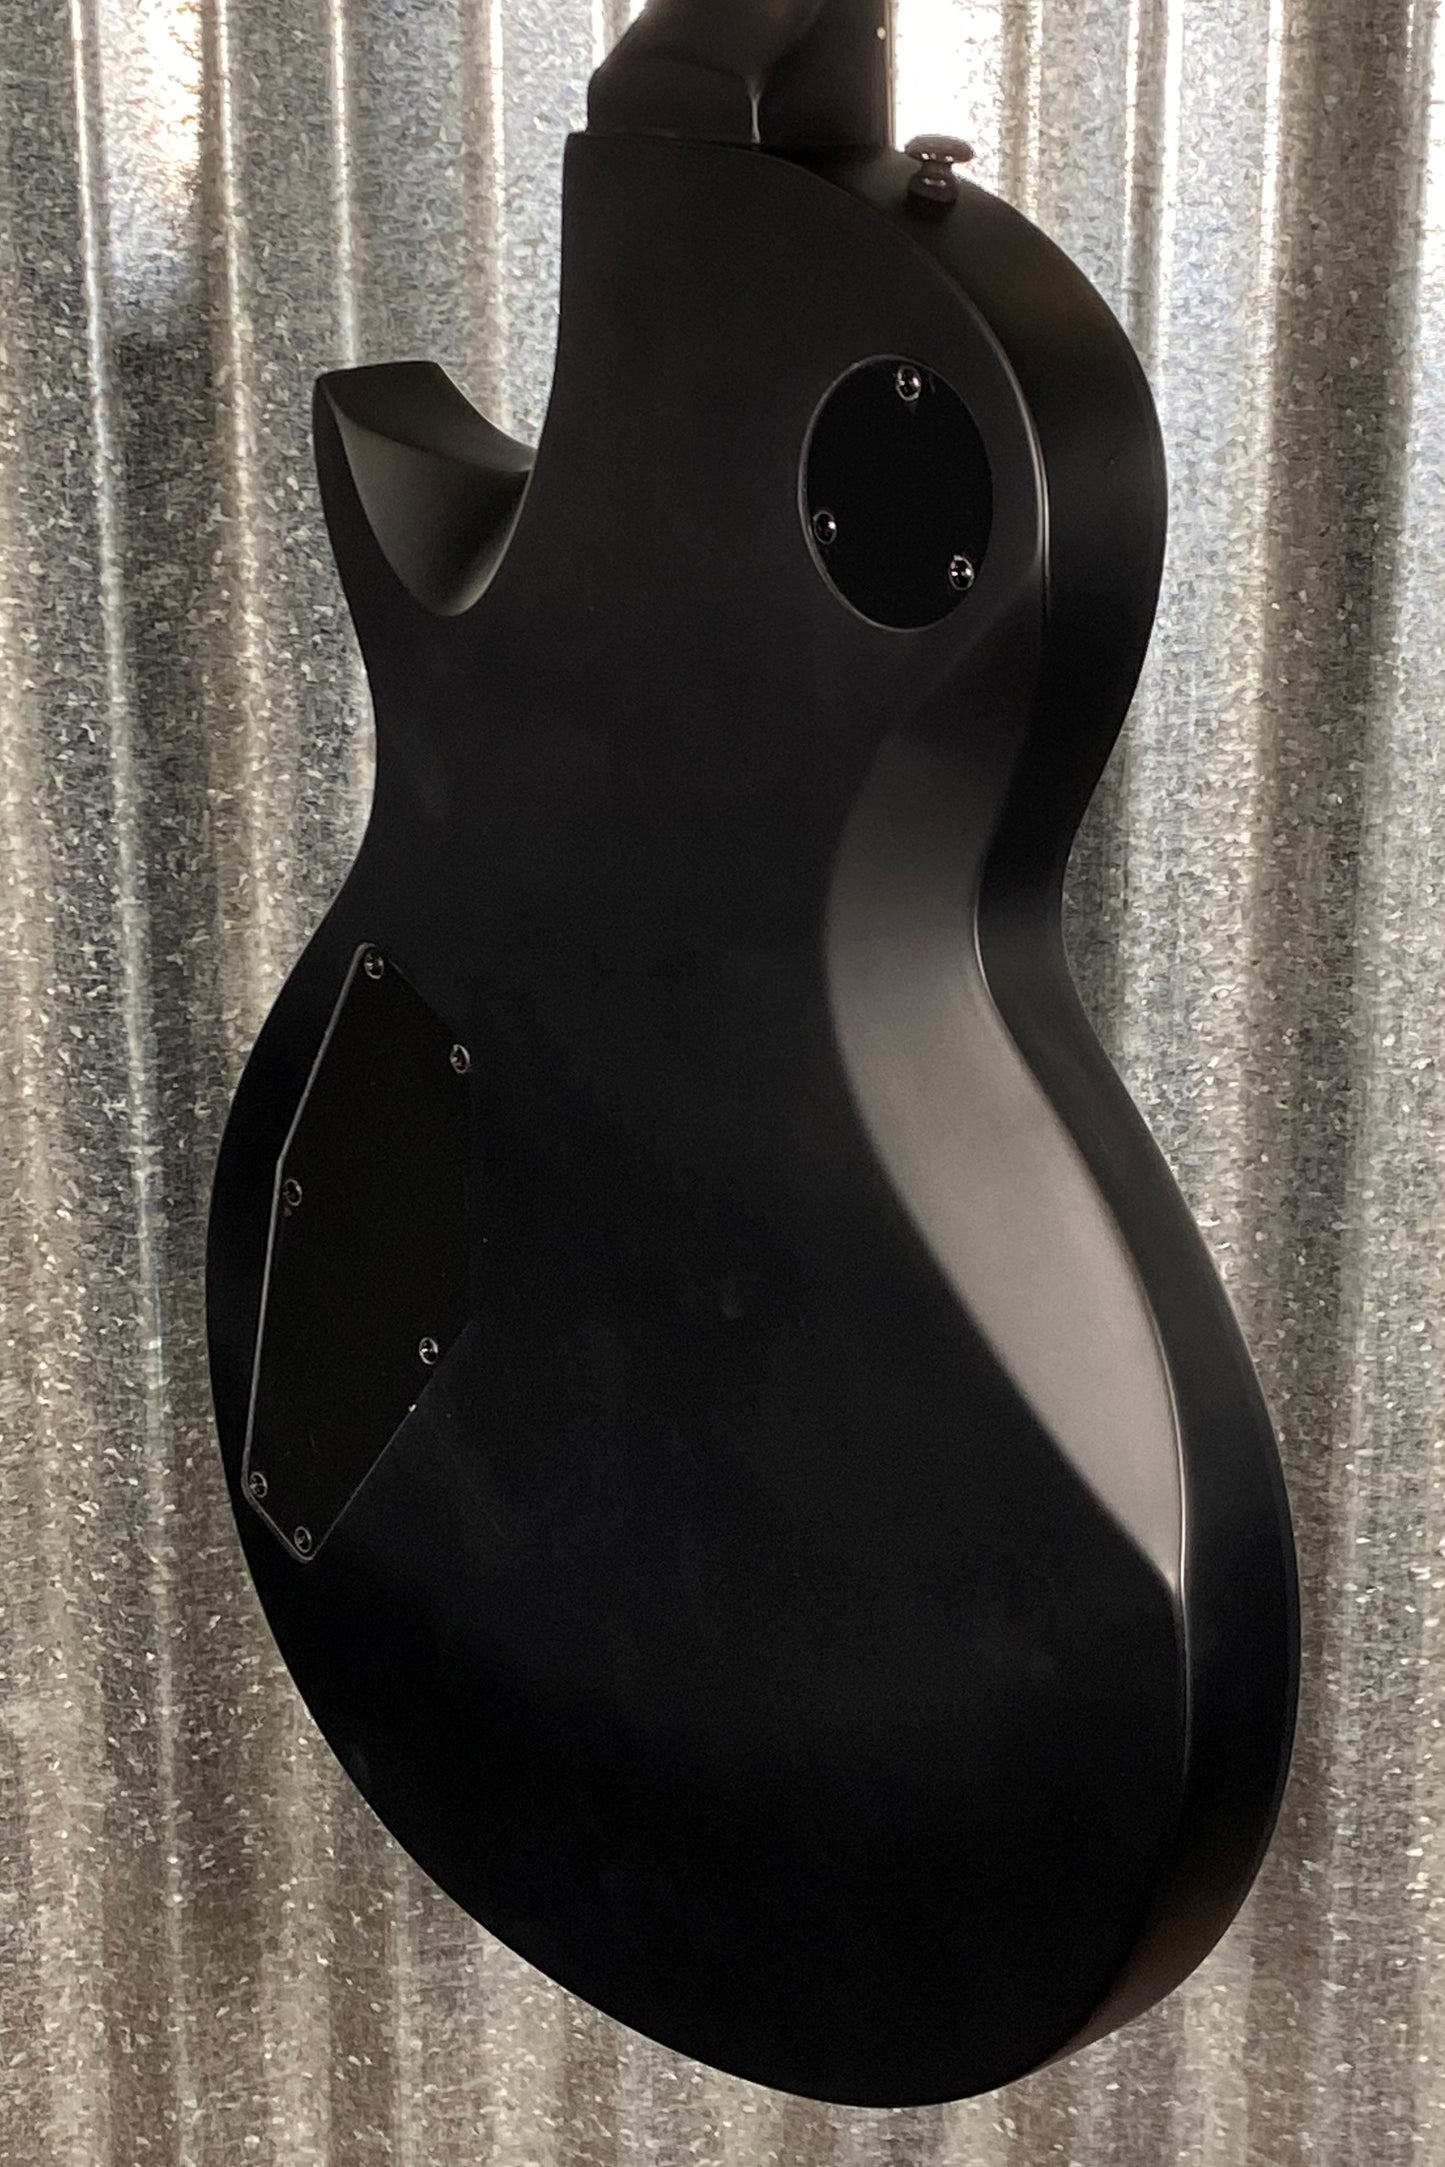 ESP LTD EC-256 Eclipse Black Satin Guitar LEC256BLKS #1214 Used